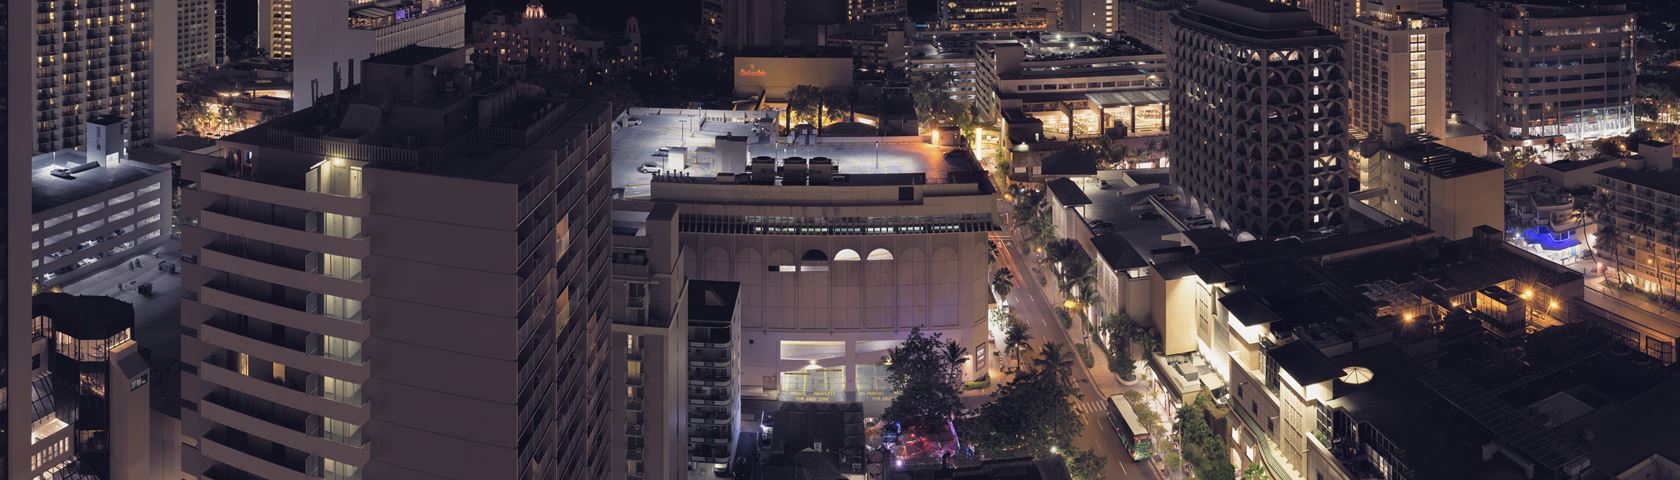 Honolulu Night City View - Performing Arts Center - HD Wallpaper 